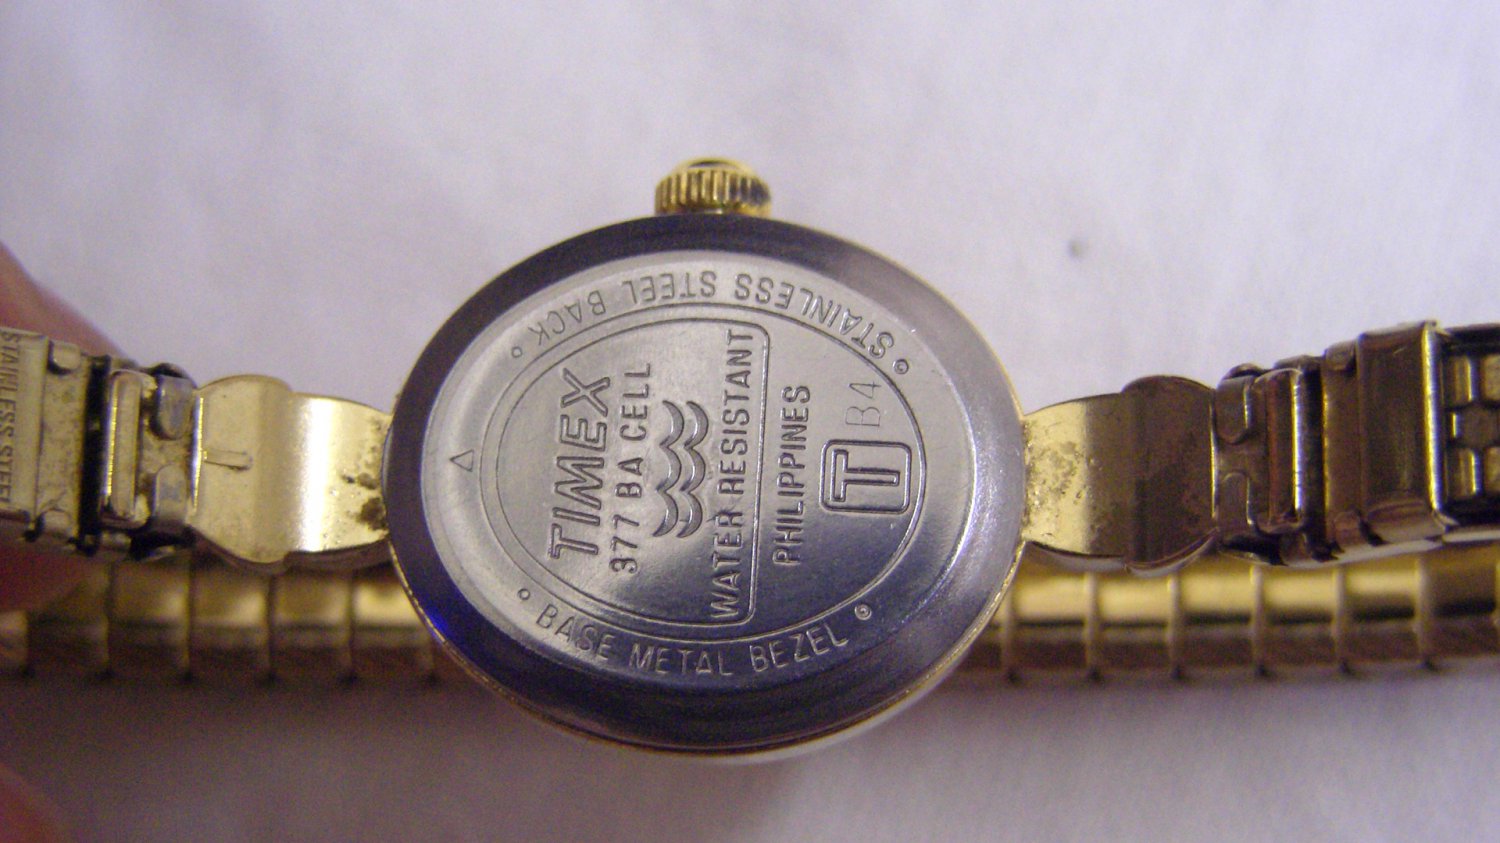 Timex vintage fits all base metal bezel stainless steel back ladies watch